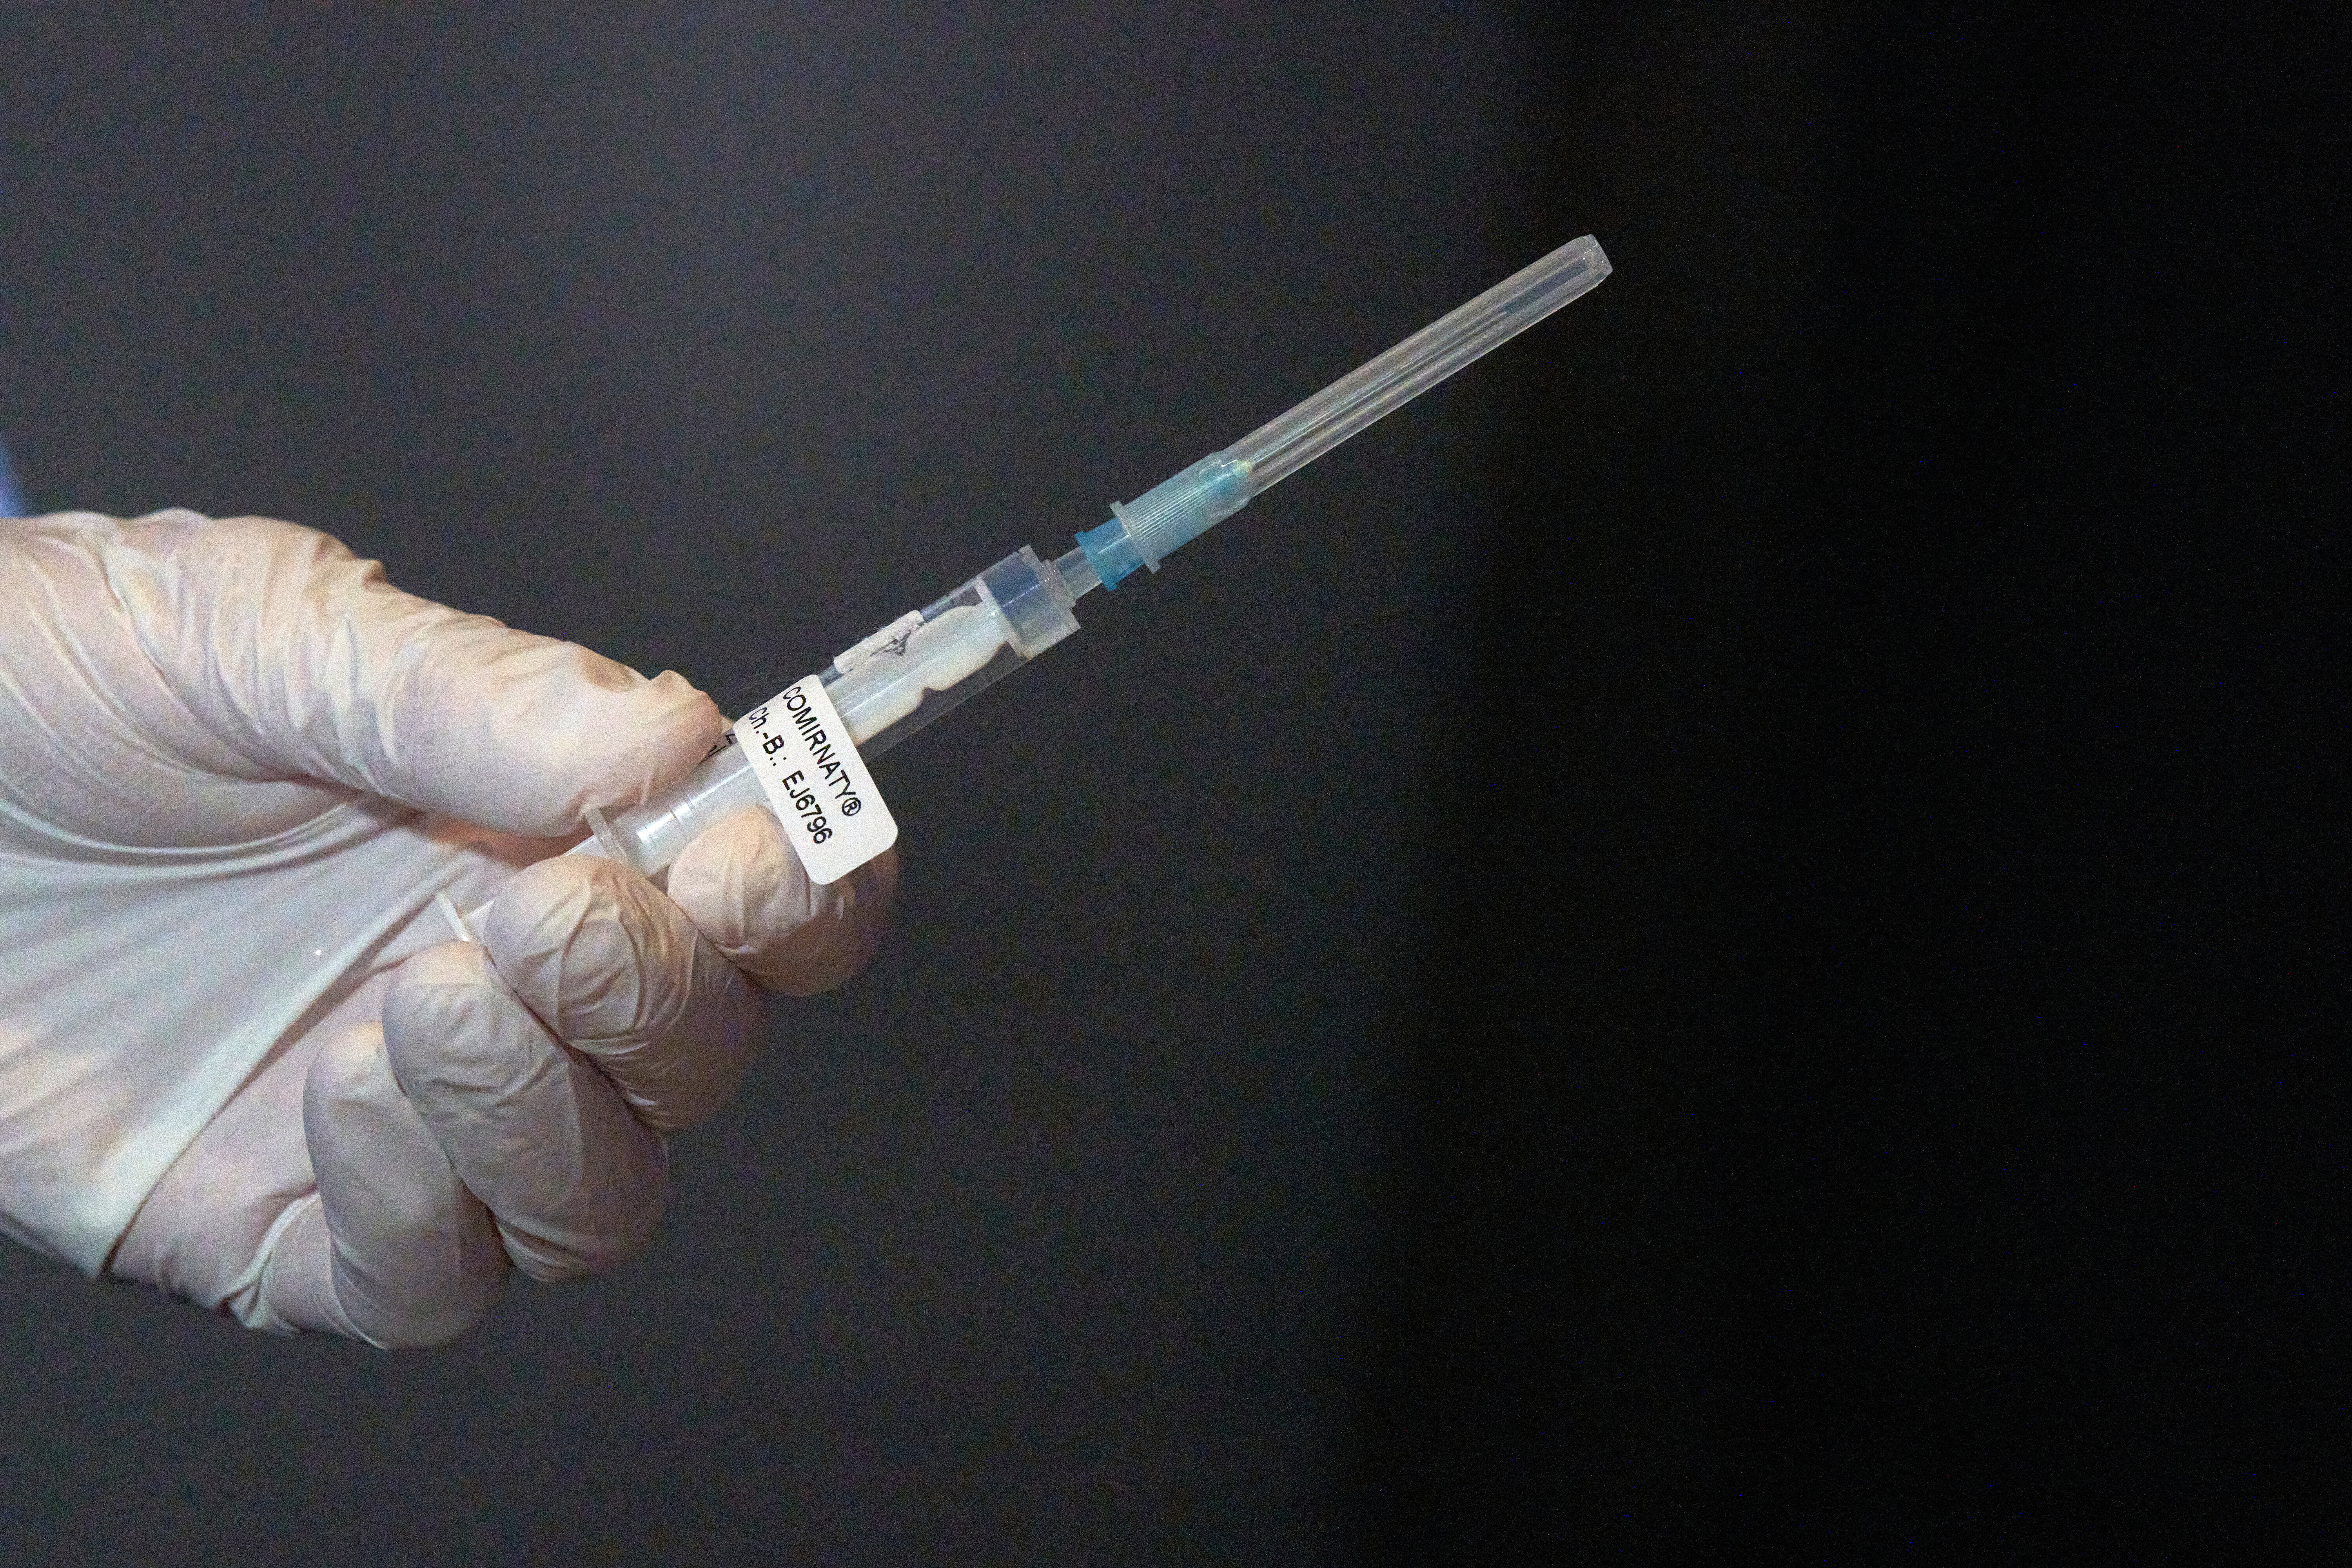 Vaccin anti-Covid: si la seconde dose est retardée, pas de garantie d'efficacité